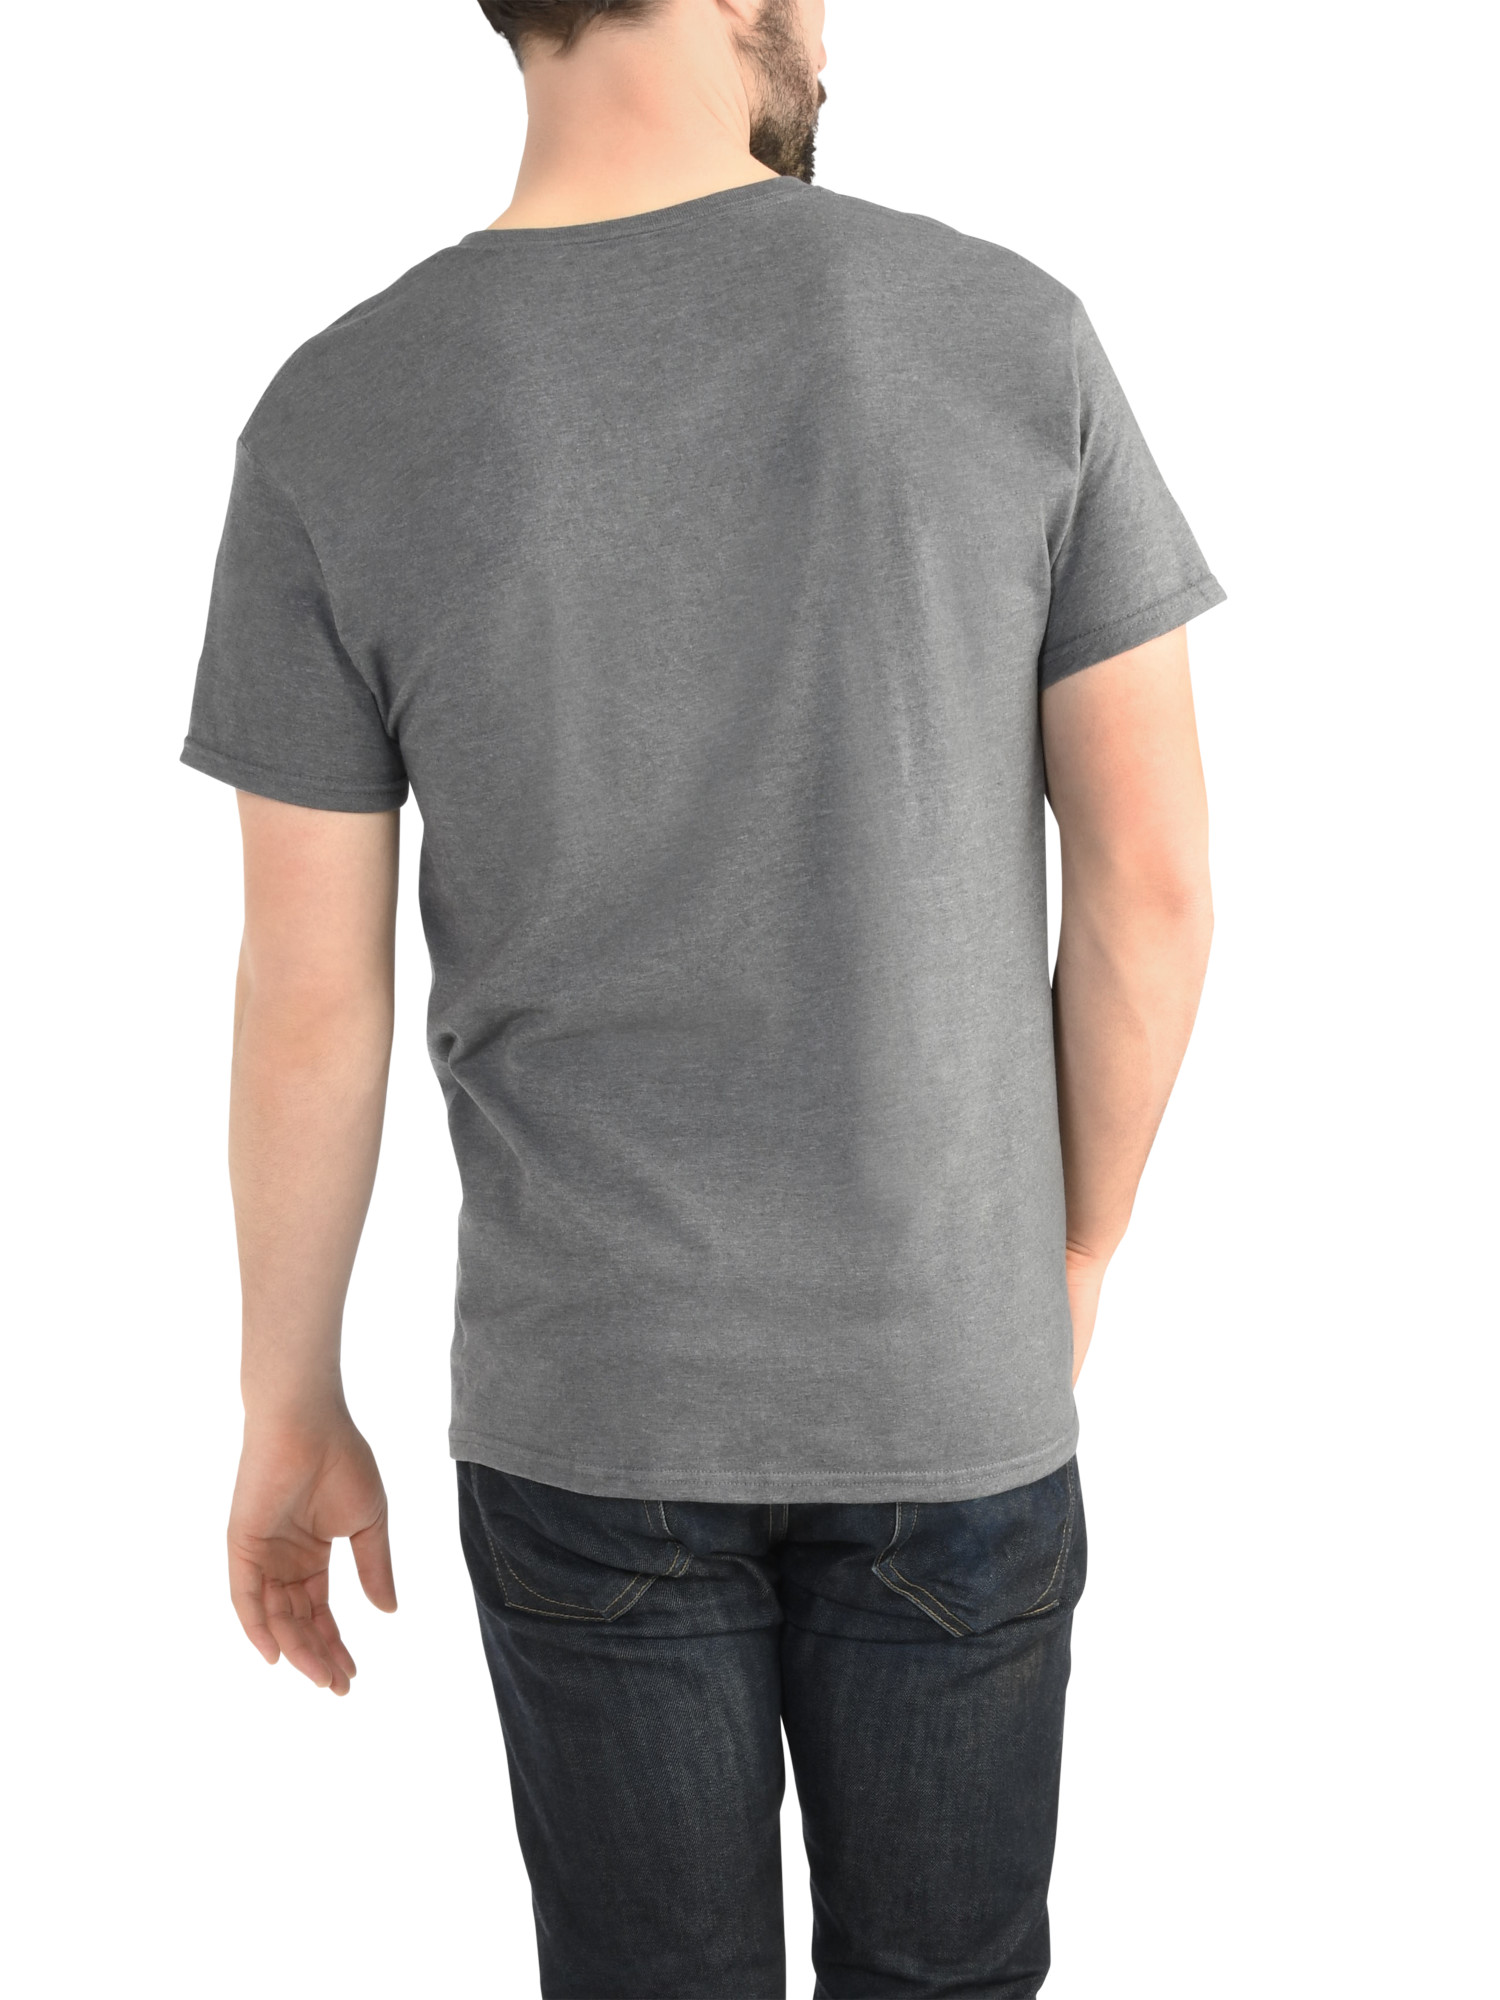 Fruit of the Loom Men's Platinum Eversoft Short Sleeve V Neck T Shirt, up to Size 4XL - image 4 of 6